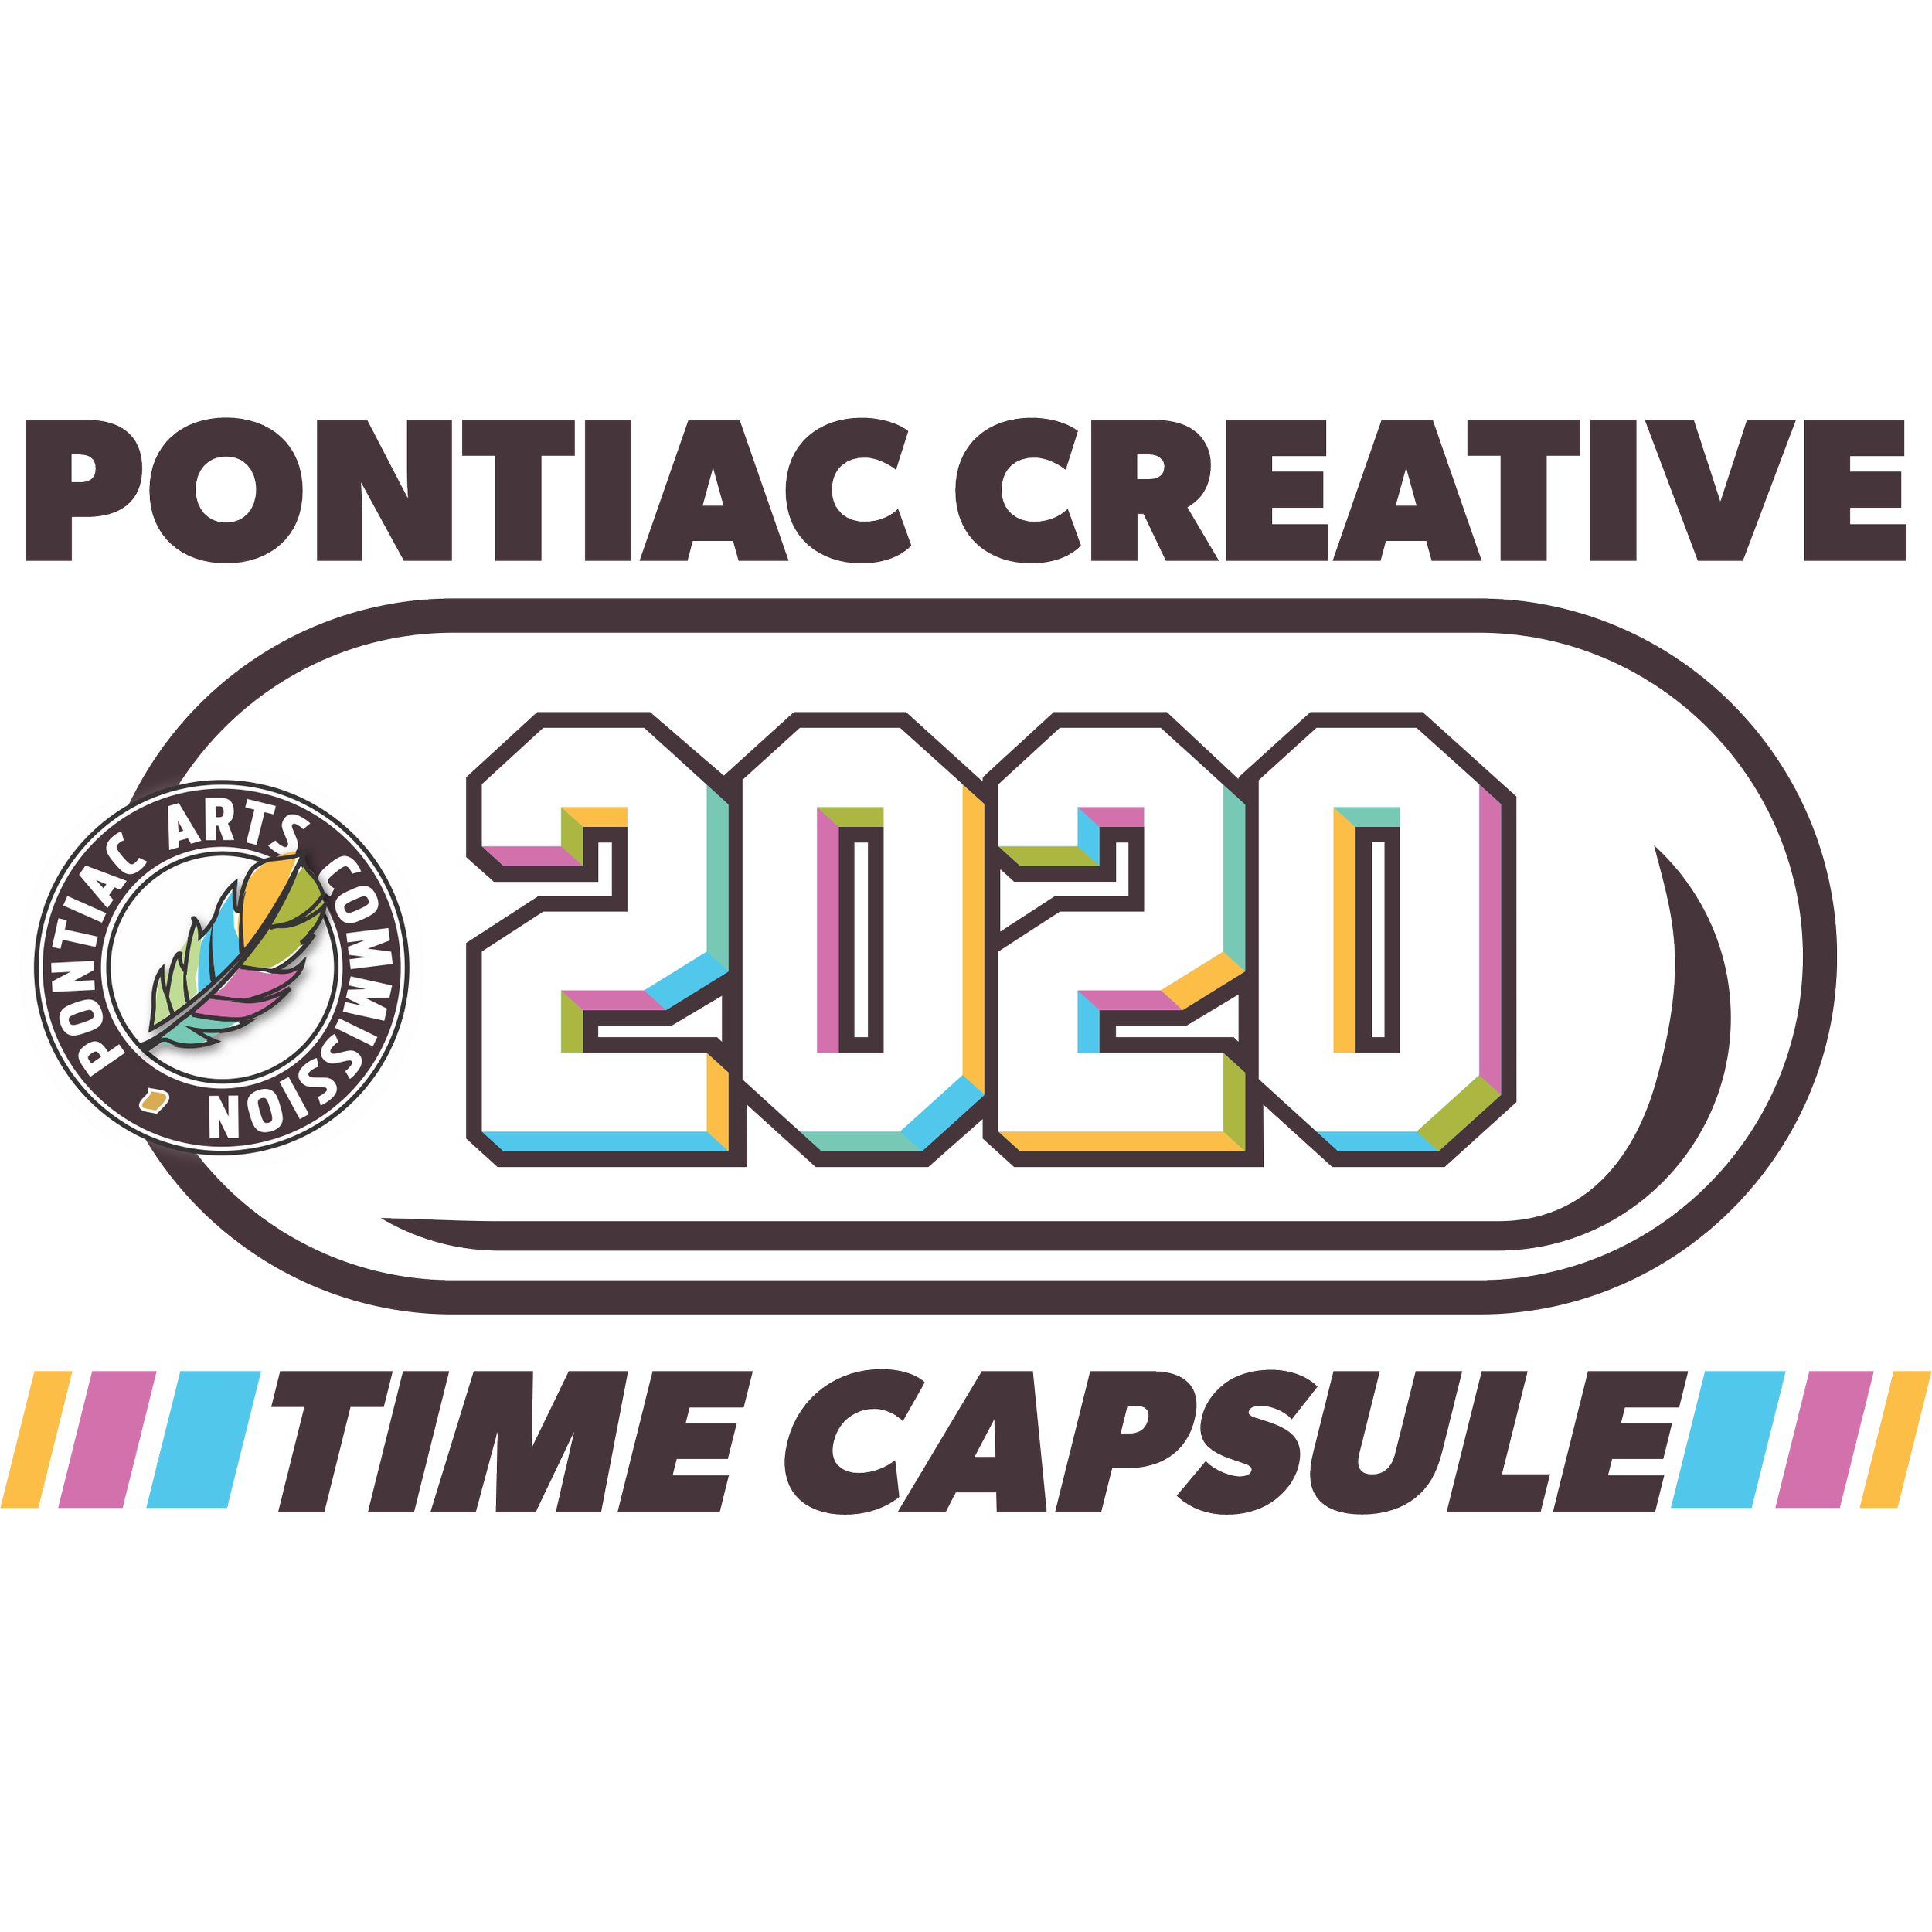 Pontiac Creative Time Capsule 2020 - Transparant.png